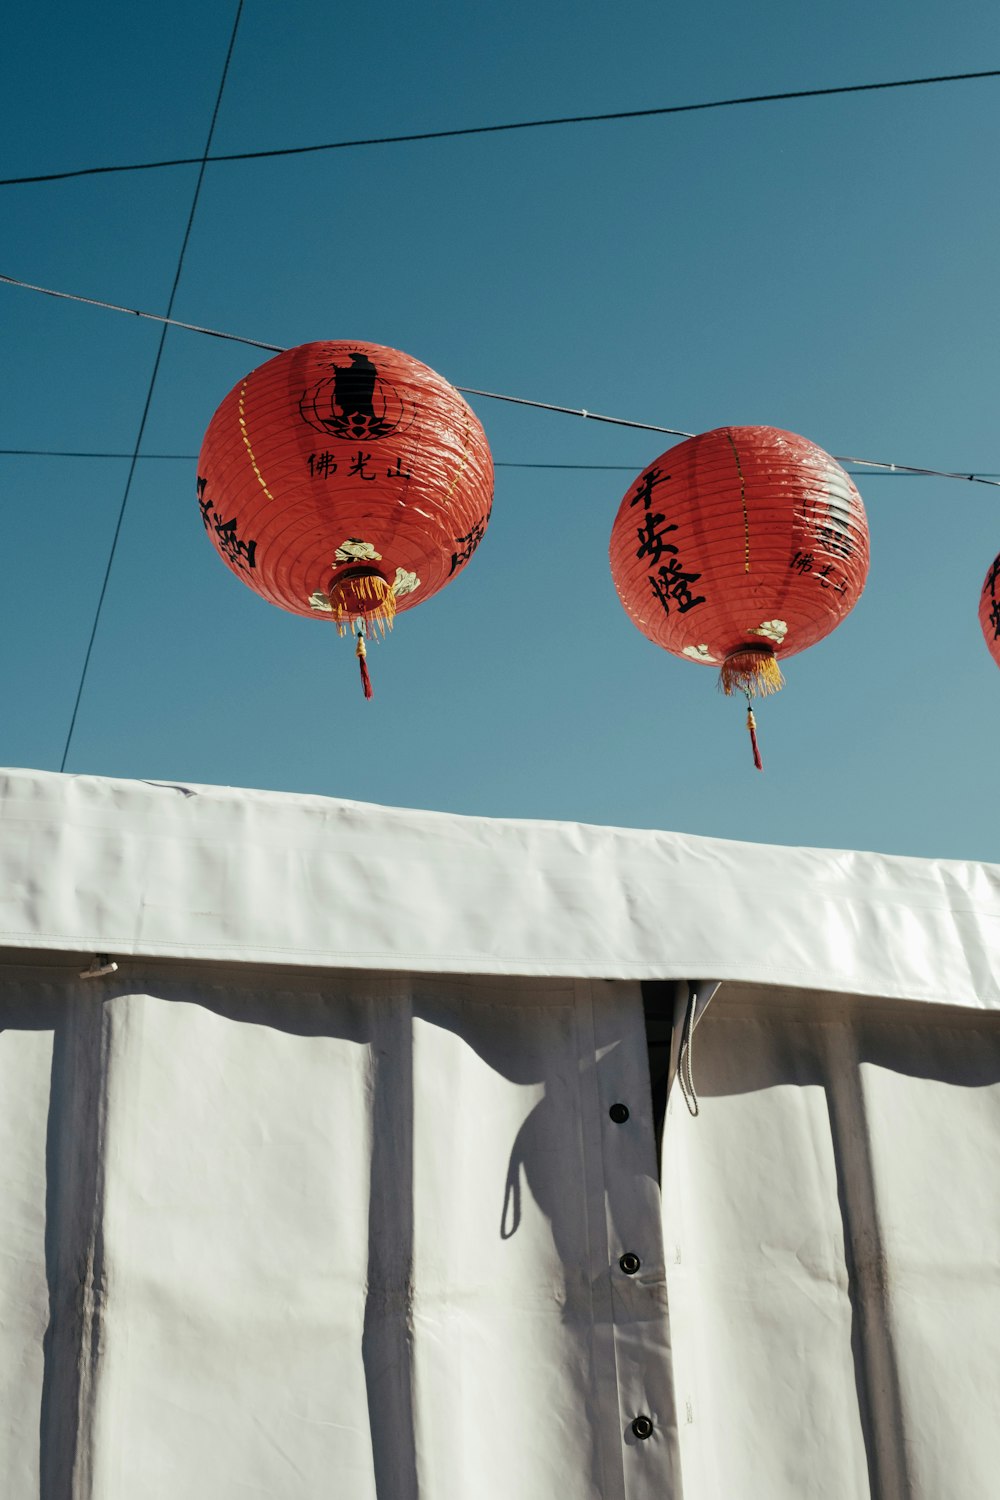 two red Chinese lanterns